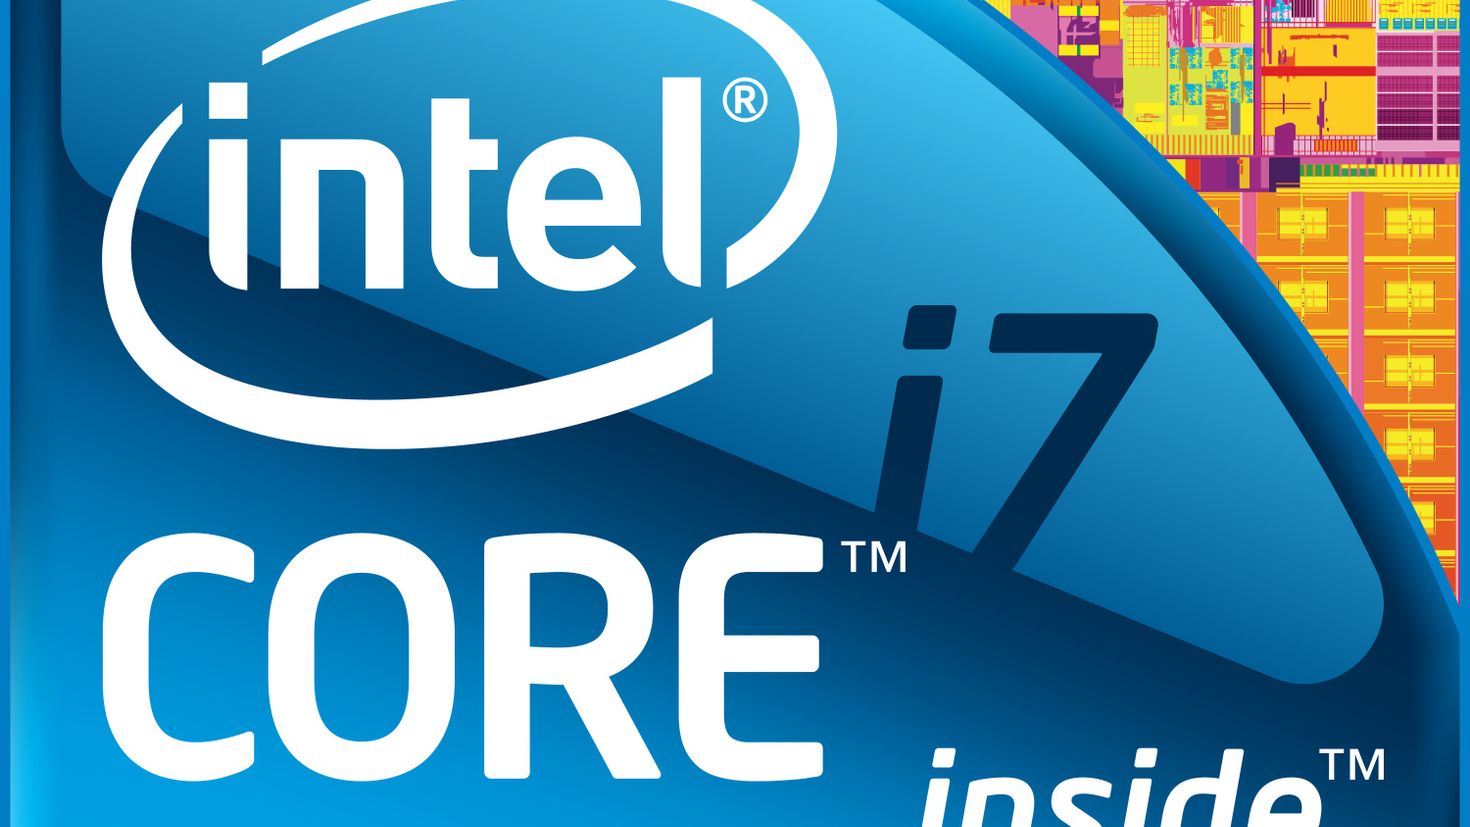 Reg intel. Intel Core i3 logo. Intel Xeon logo. Intel Core i3 inside. Intel Core i5 logo.